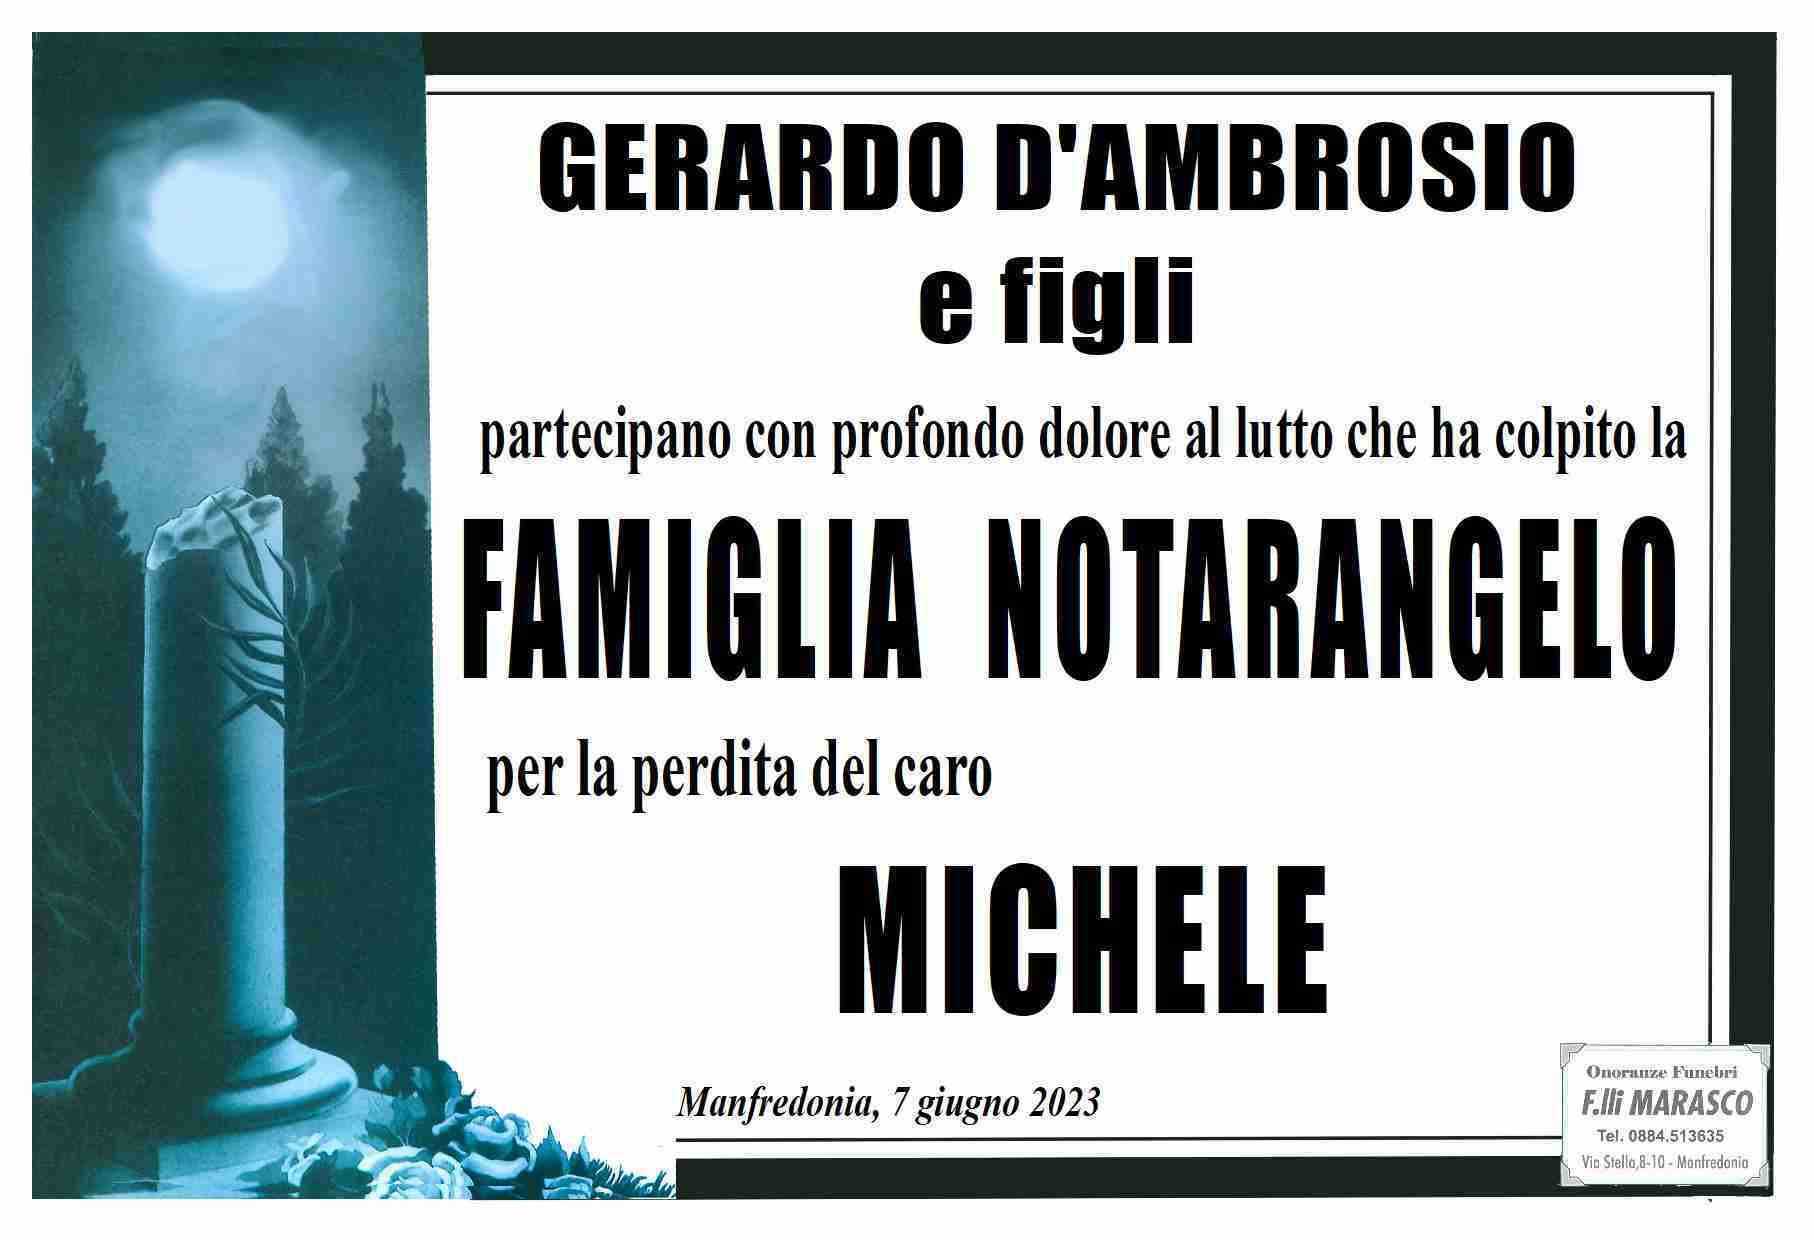 Michele Notarangelo